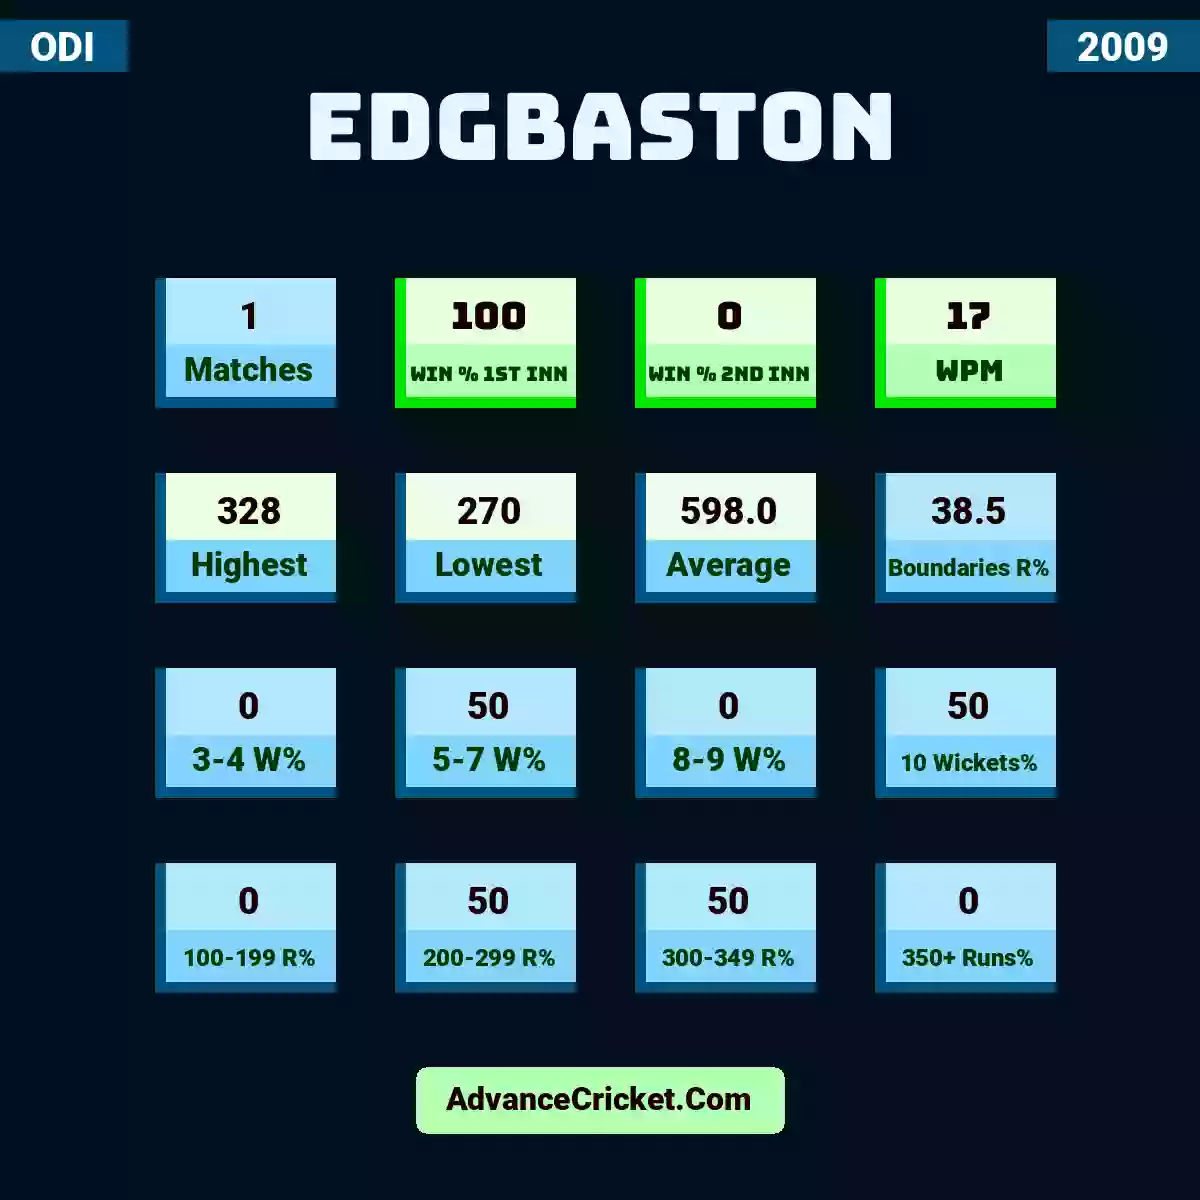 Image showing Edgbaston with Matches: 1, Win % 1st Inn: 100, Win % 2nd Inn: 0, WPM: 17, Highest: 328, Lowest: 270, Average: 598.0, Boundaries R%: 38.5, 3-4 W%: 0, 5-7 W%: 50, 8-9 W%: 0, 10 Wickets%: 50, 100-199 R%: 0, 200-299 R%: 50, 300-349 R%: 50, 350+ Runs%: 0.